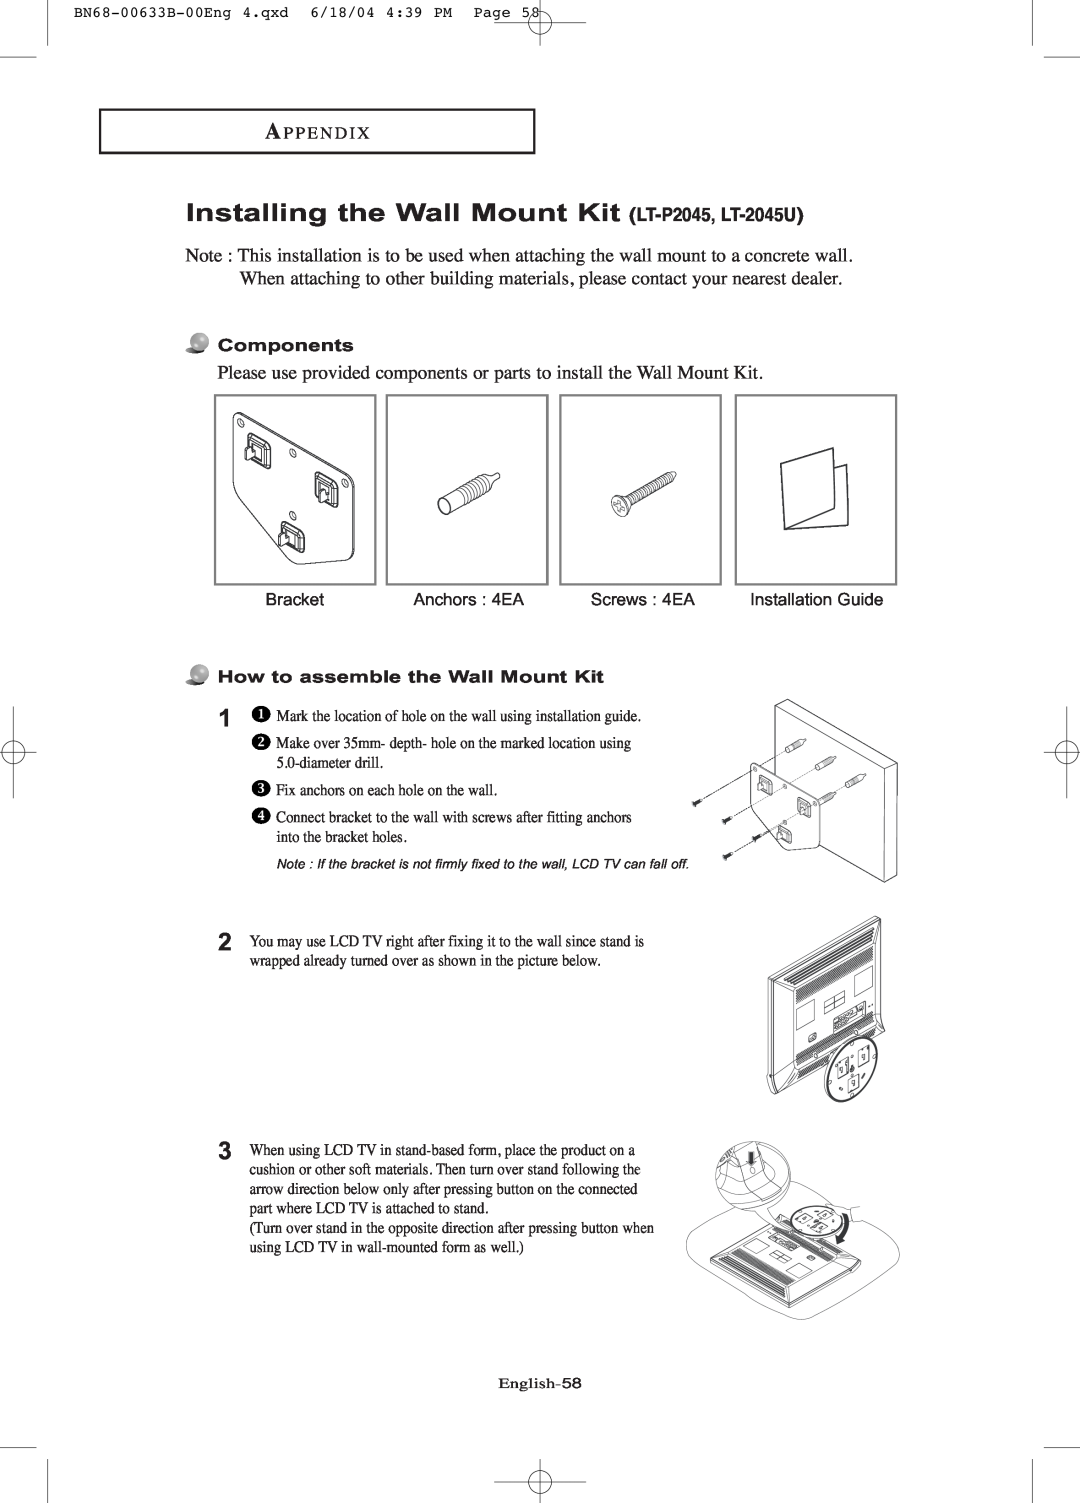 Samsung LT-P1545 manual Installing the Wall Mount Kit LT-P2045, LT-2045U, A P P E N D I, Components 